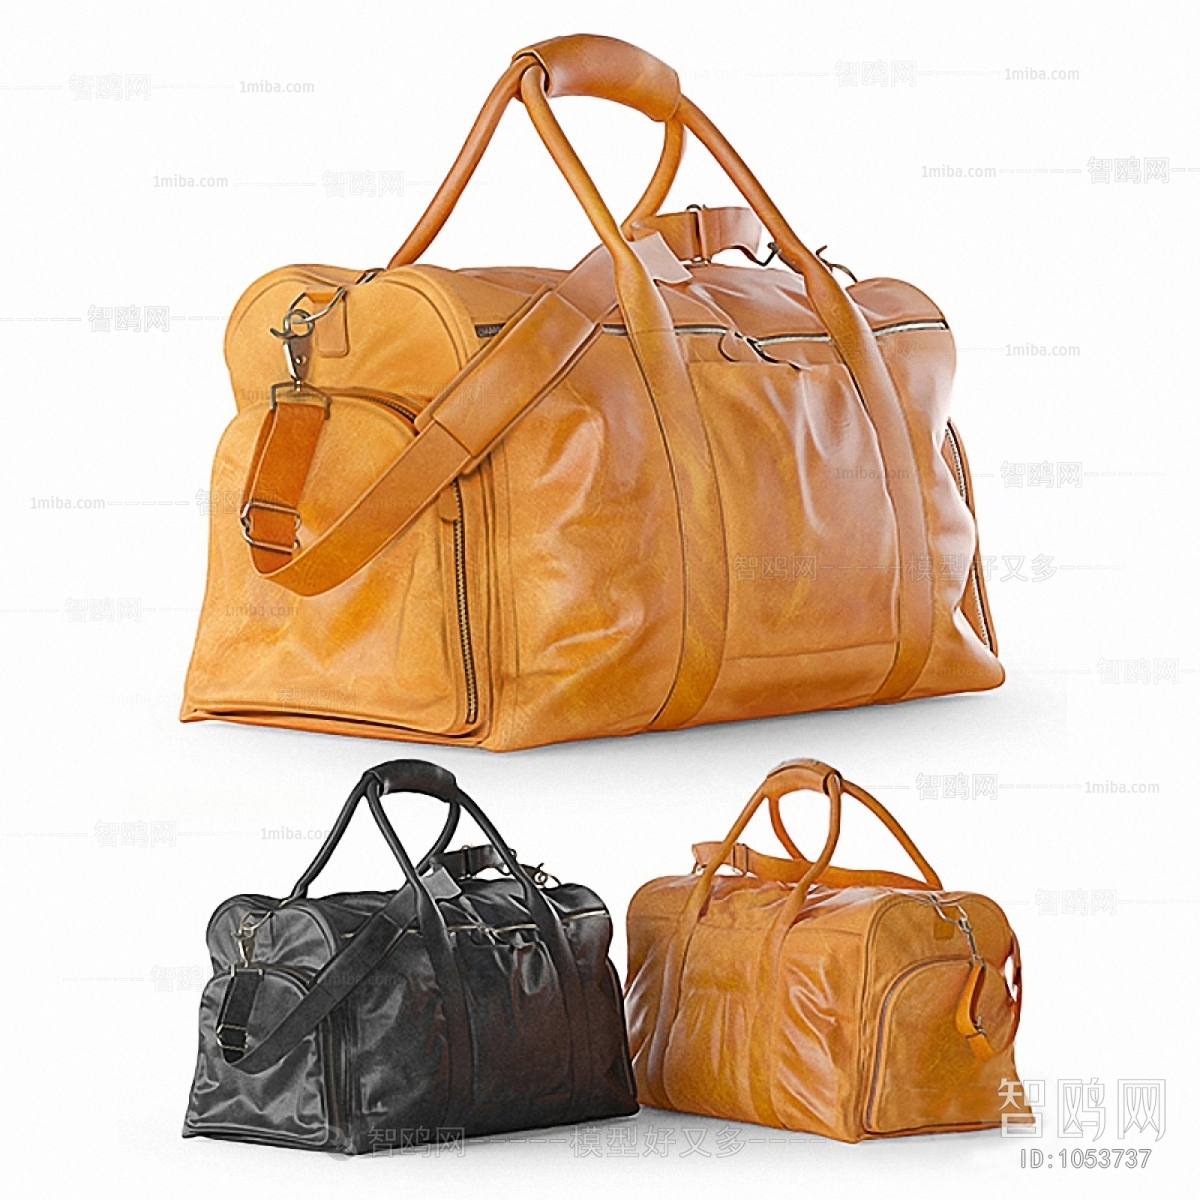 Modern Lady's Bag